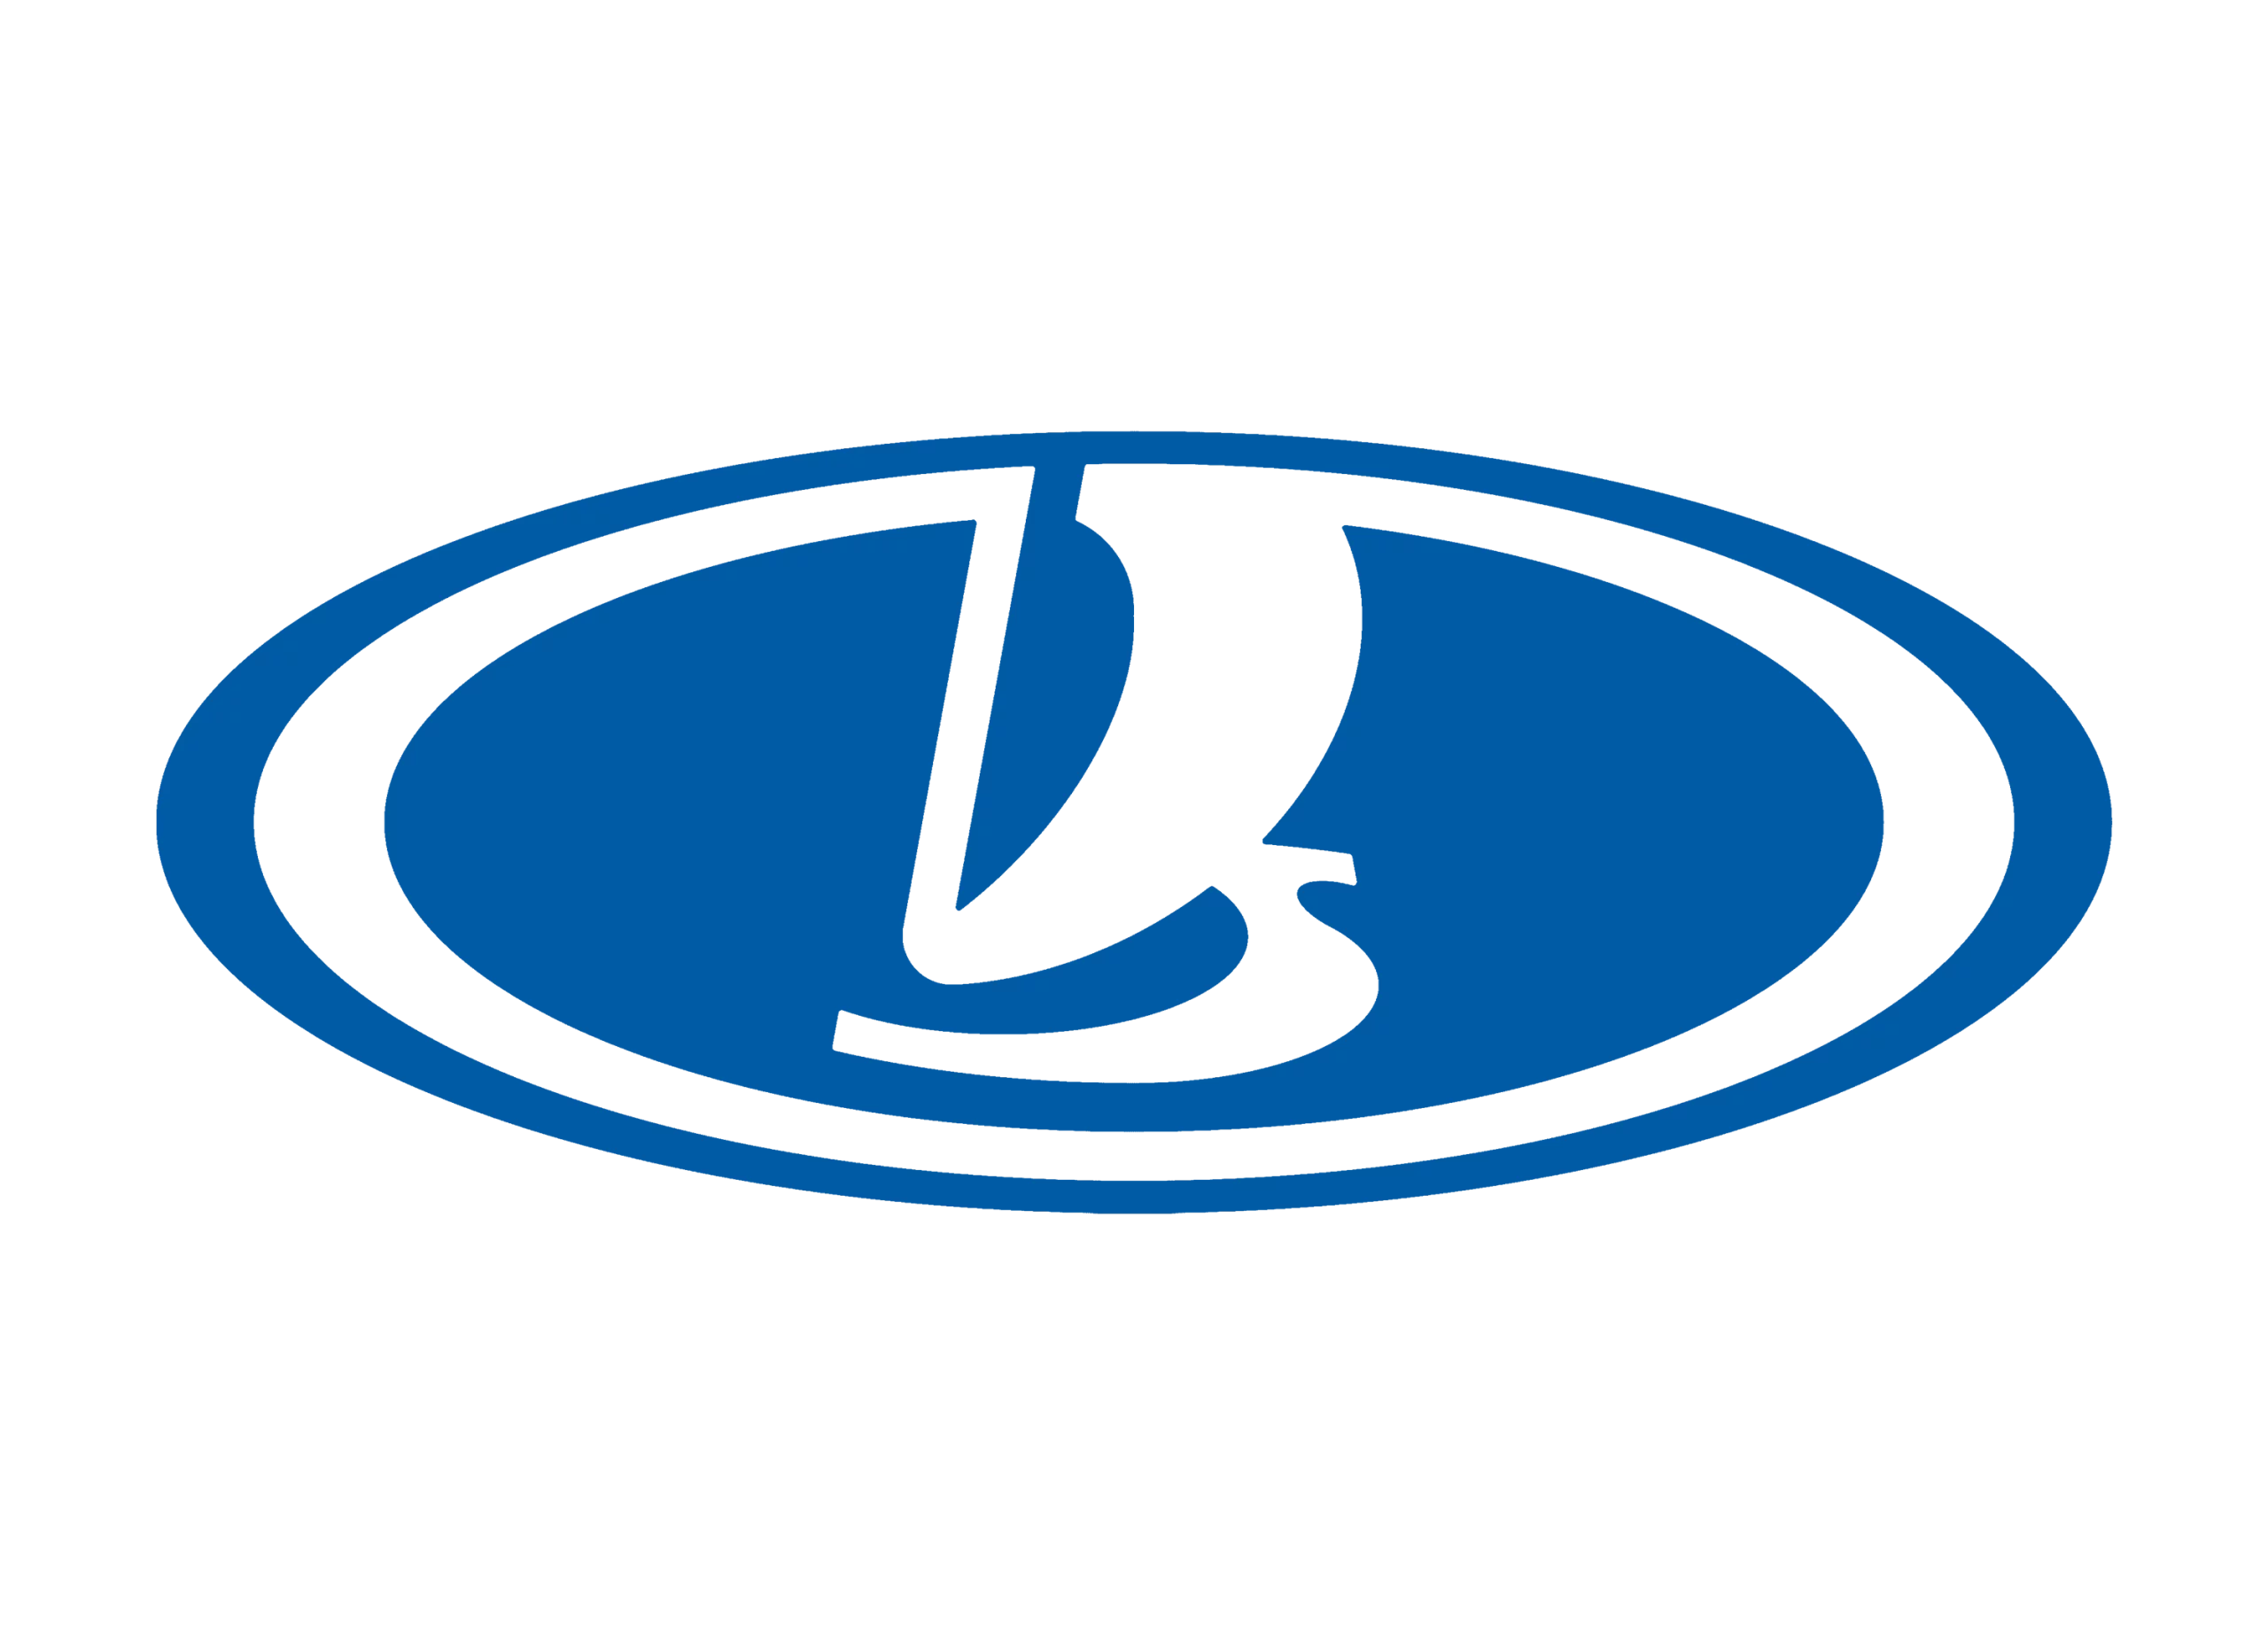 Lada logo 2002-2007